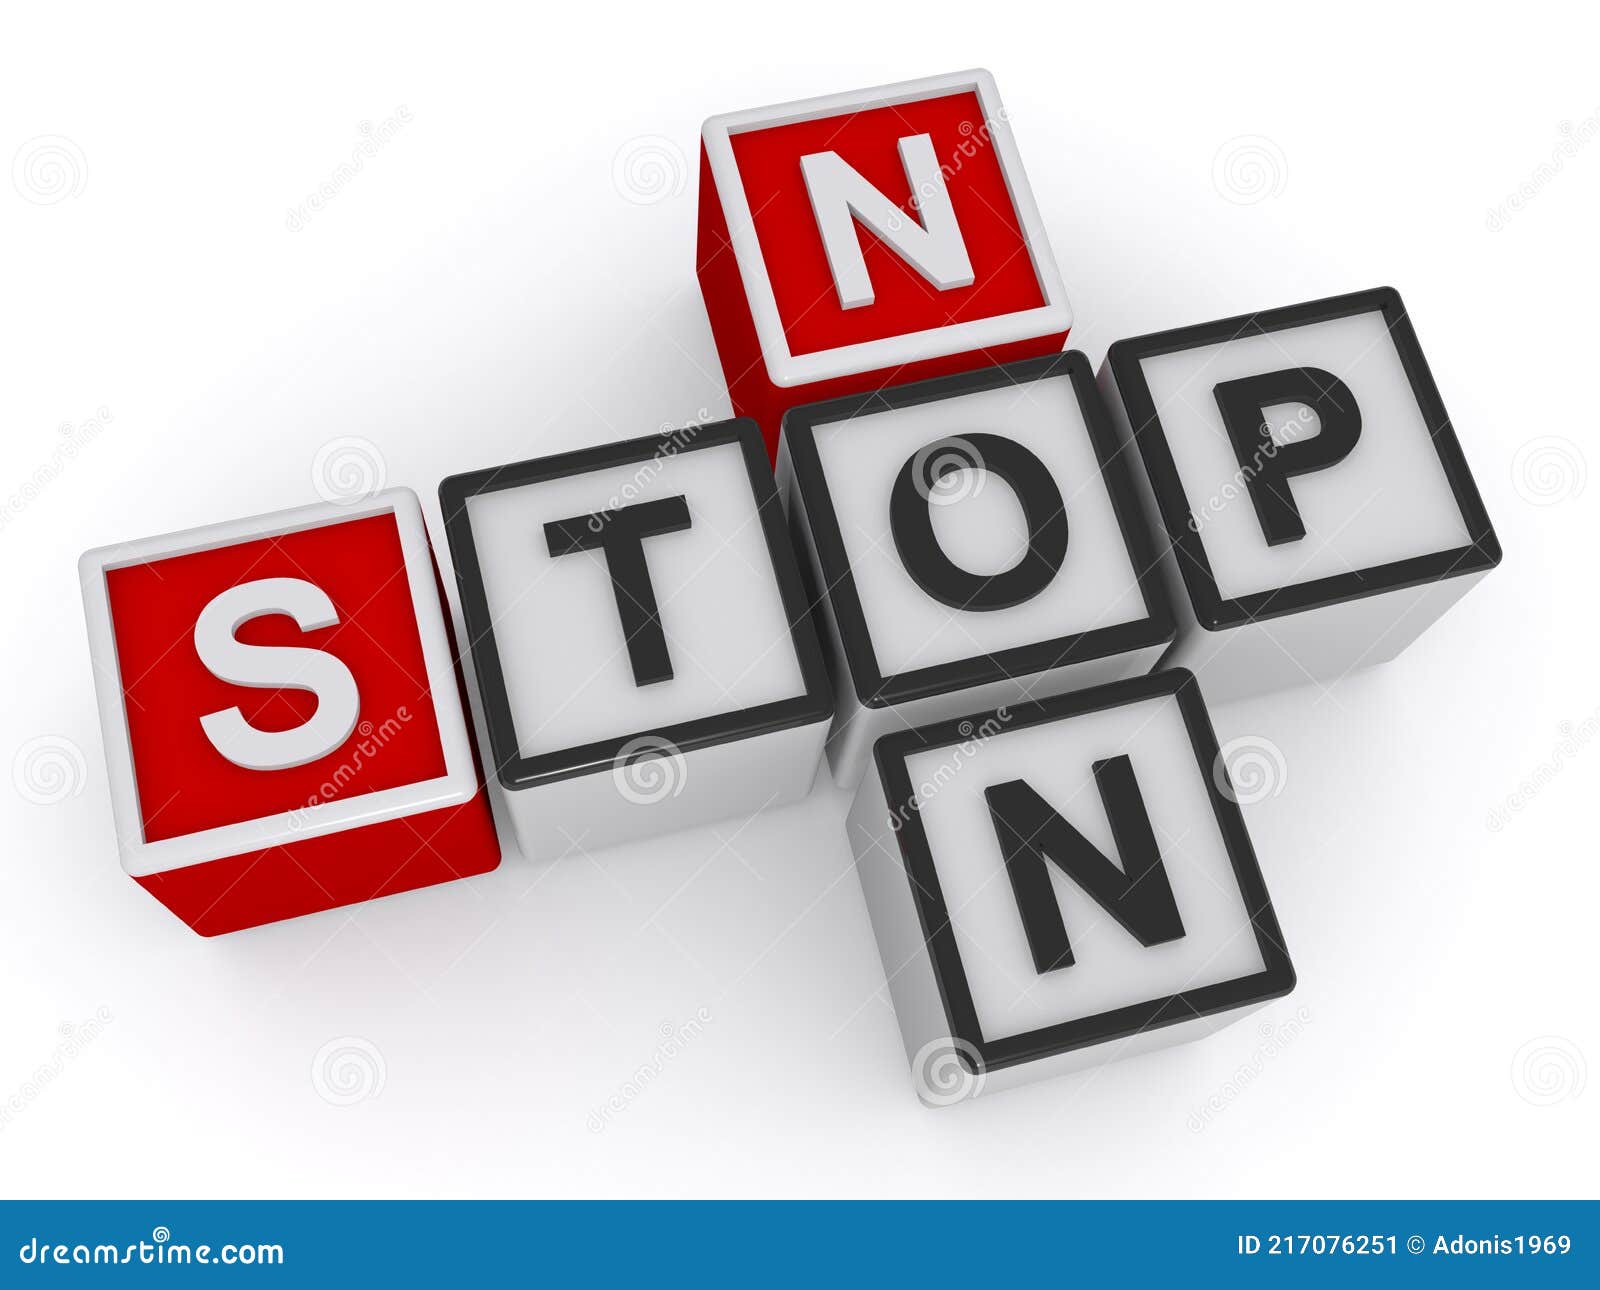 Non stop word block stock illustration. Illustration of signs - 217076251